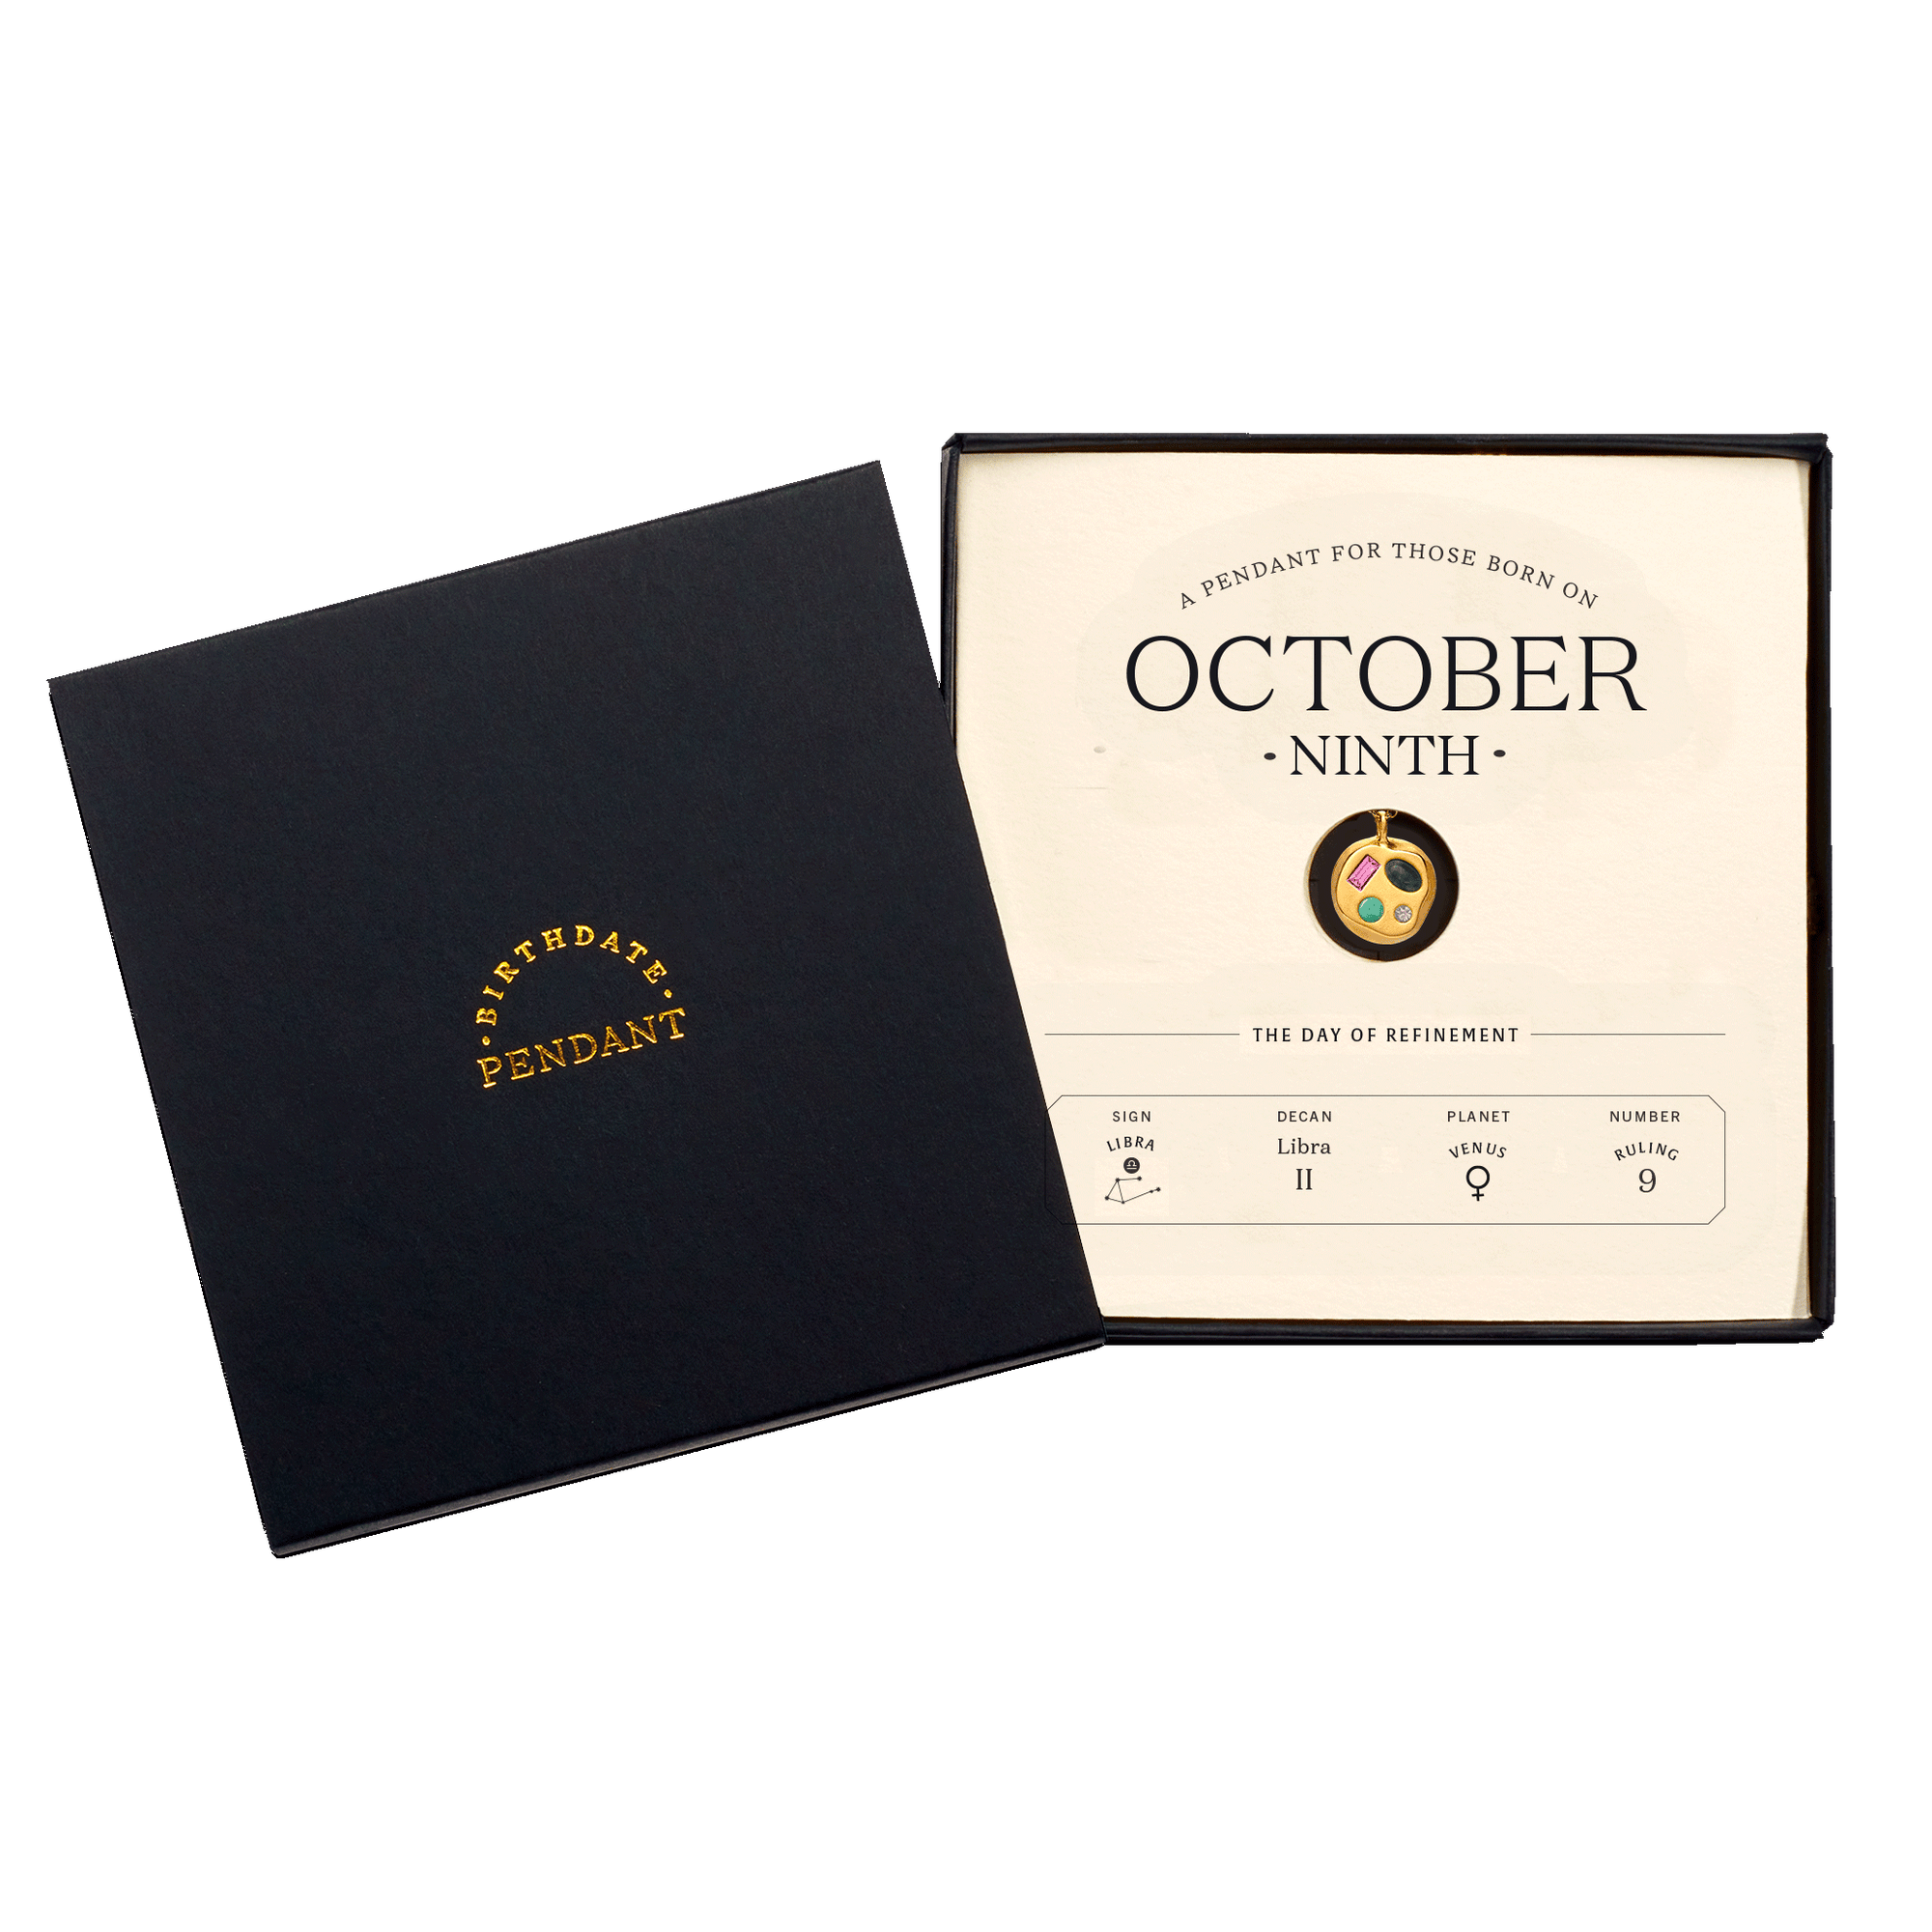 The October Ninth Pendant inside its box